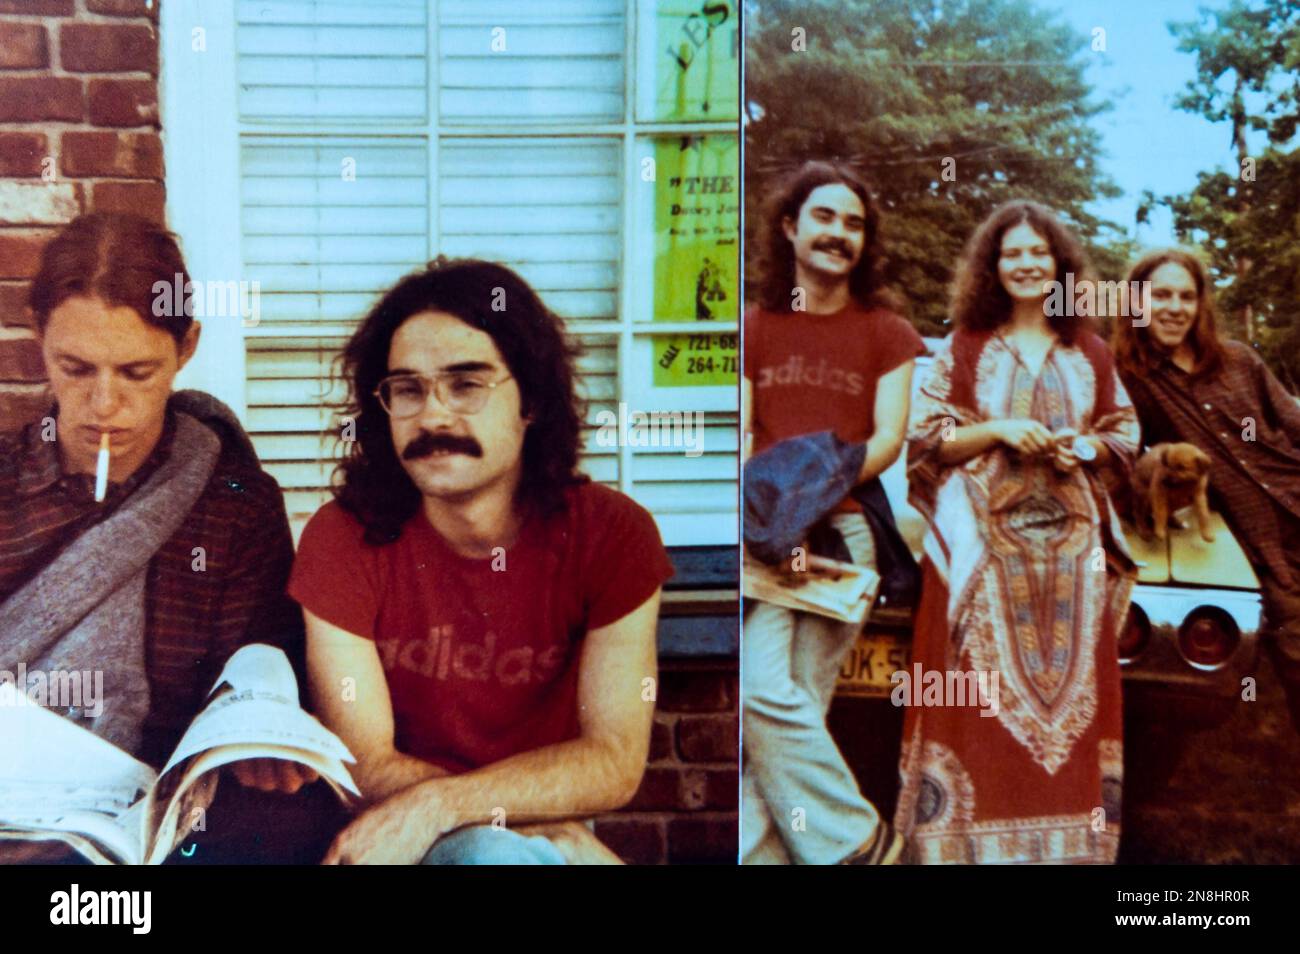 East Orange, NJ, USA, Group Portrait, American Teenagers, 1970s VIntage Photos, Youth Culture Stock Photo